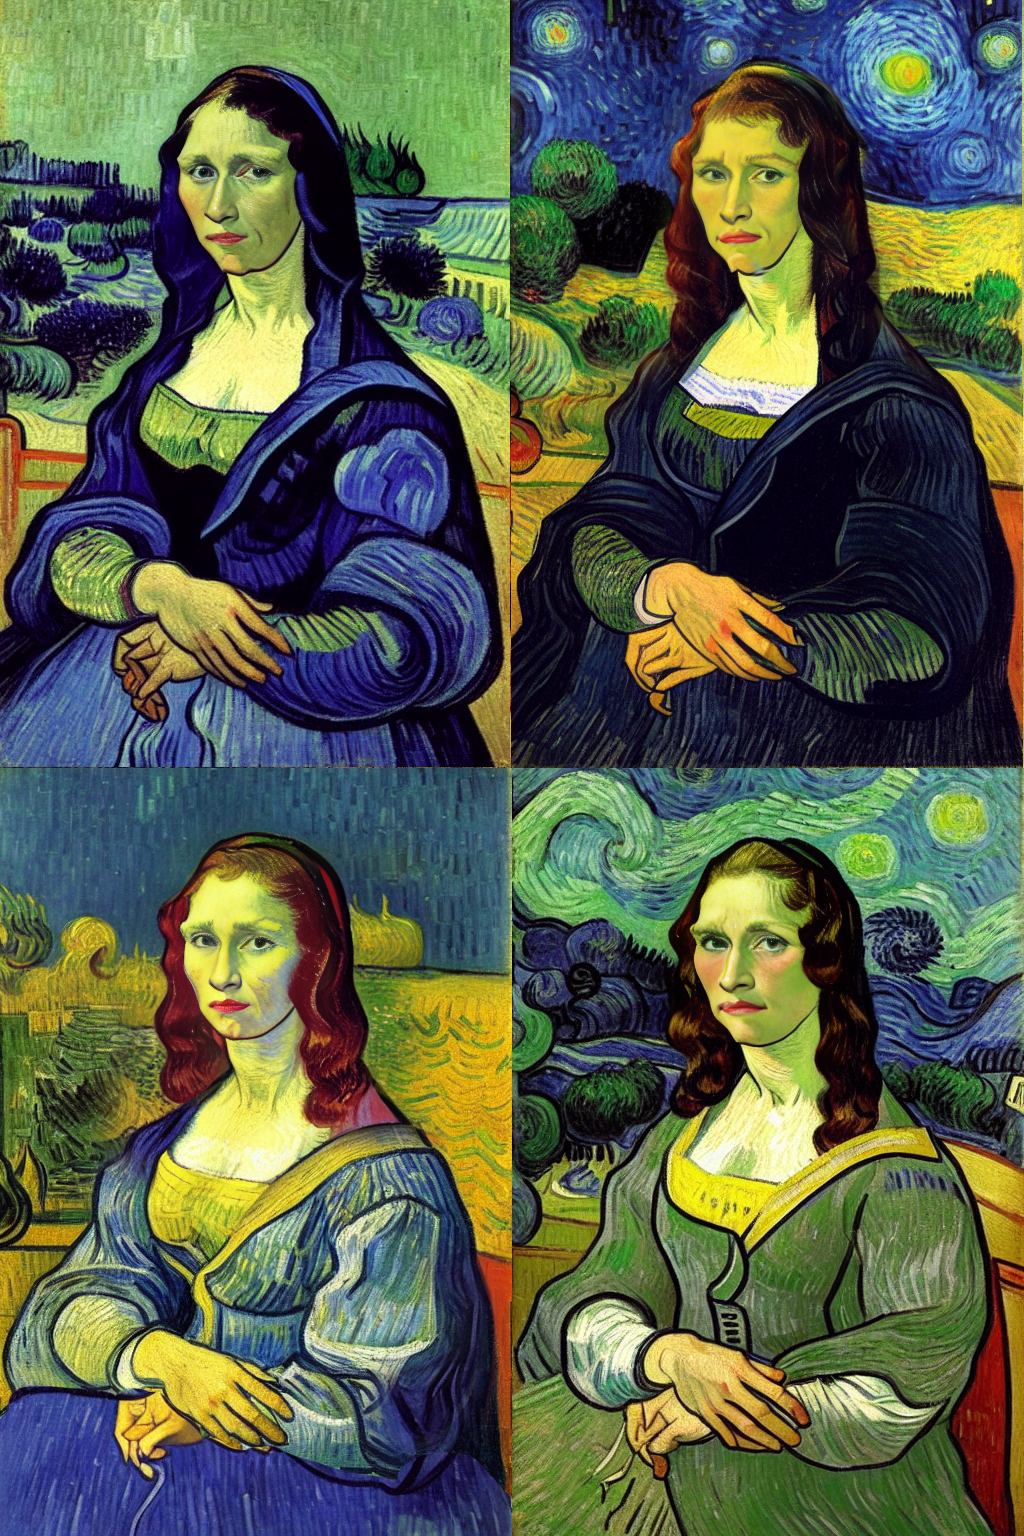 Artist Gives the Mona Lisa a Glamorous Modern Makeover